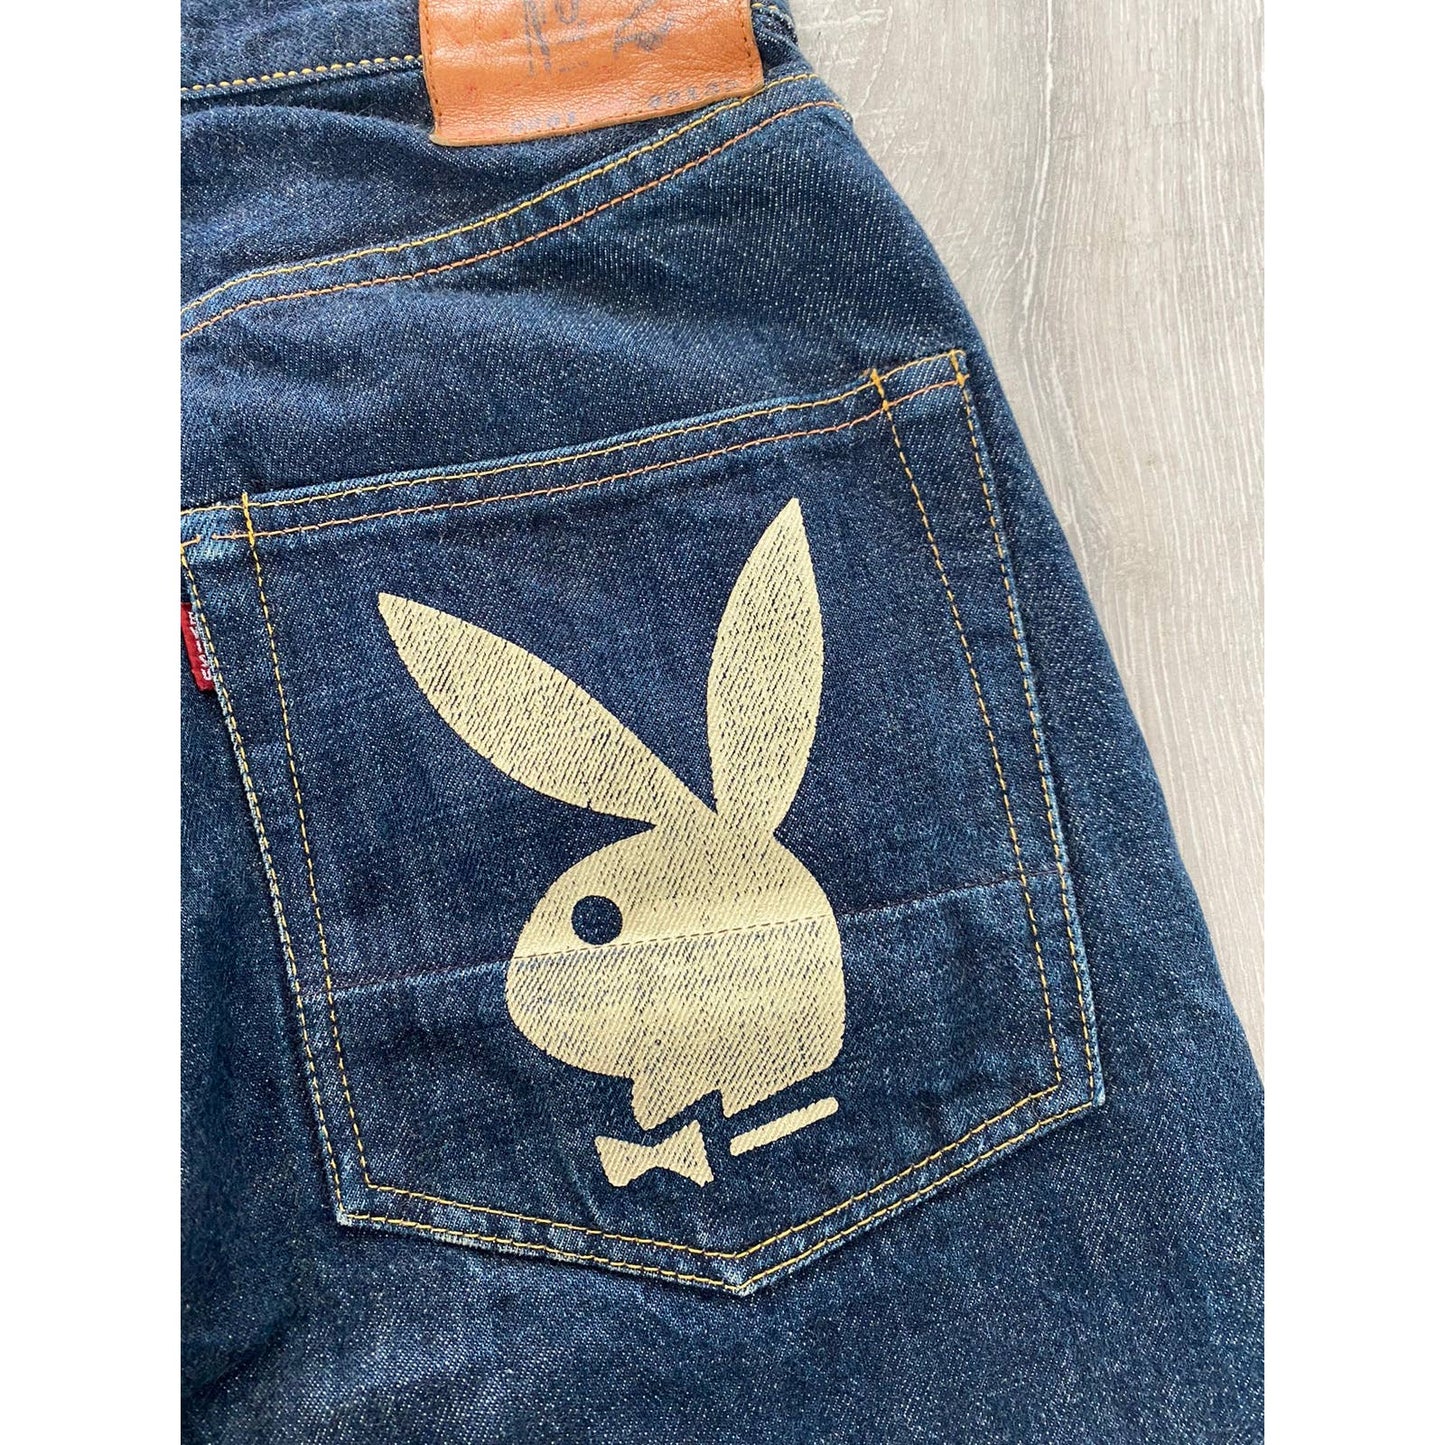 Evisu Playboy jeans vintage selvedge denim Japan RARE